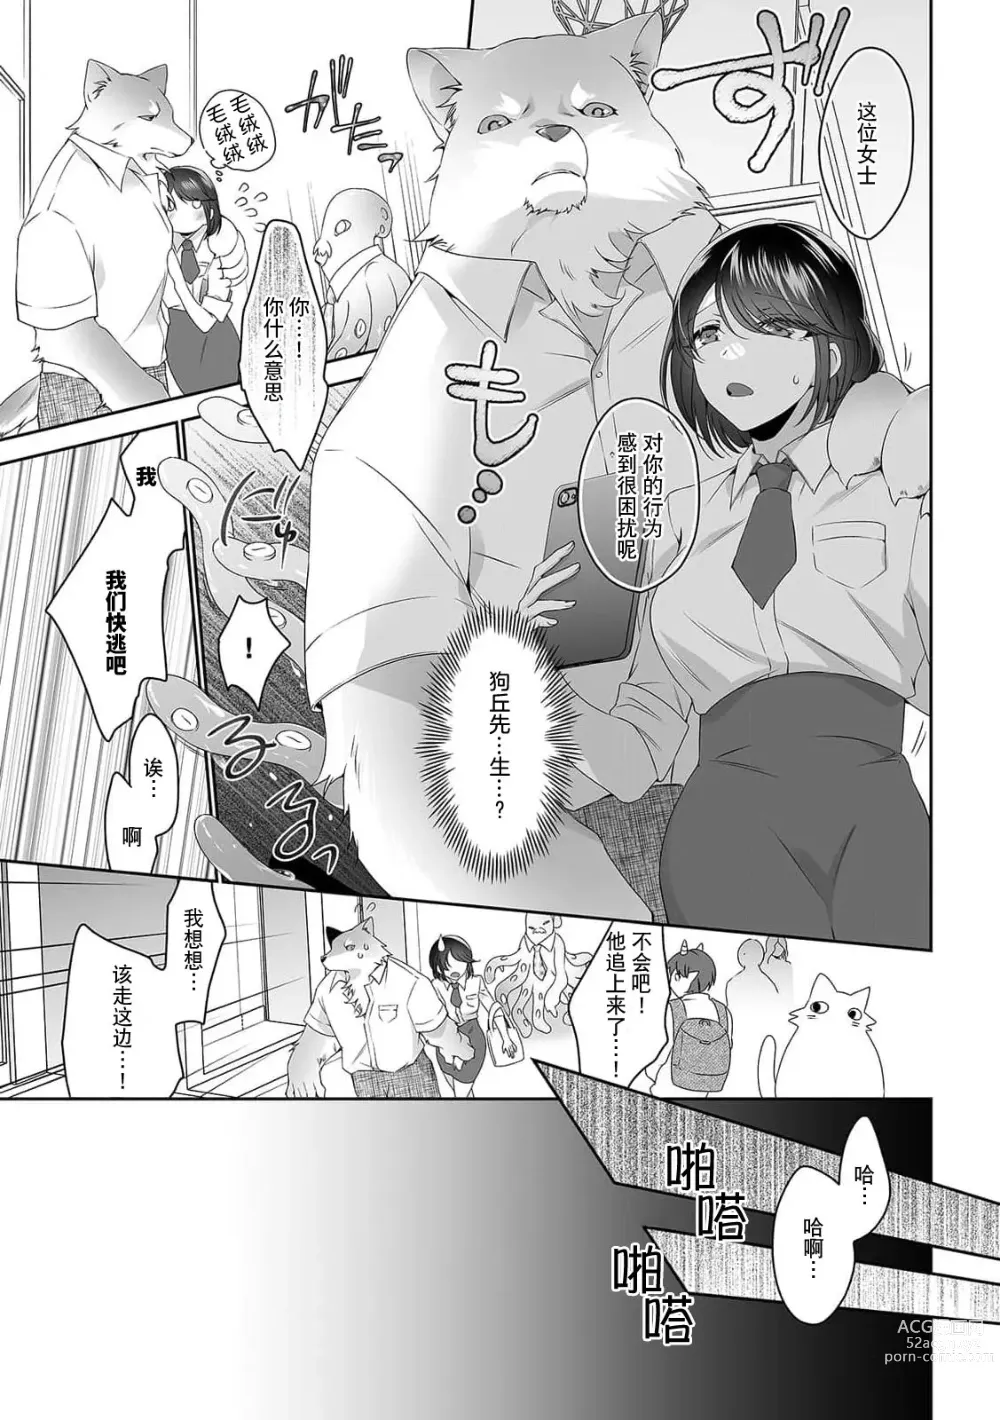 Page 6 of manga 顺势跟着毛绒大狗一起逃进了宾馆里！？「想要和你做舒服的事…」